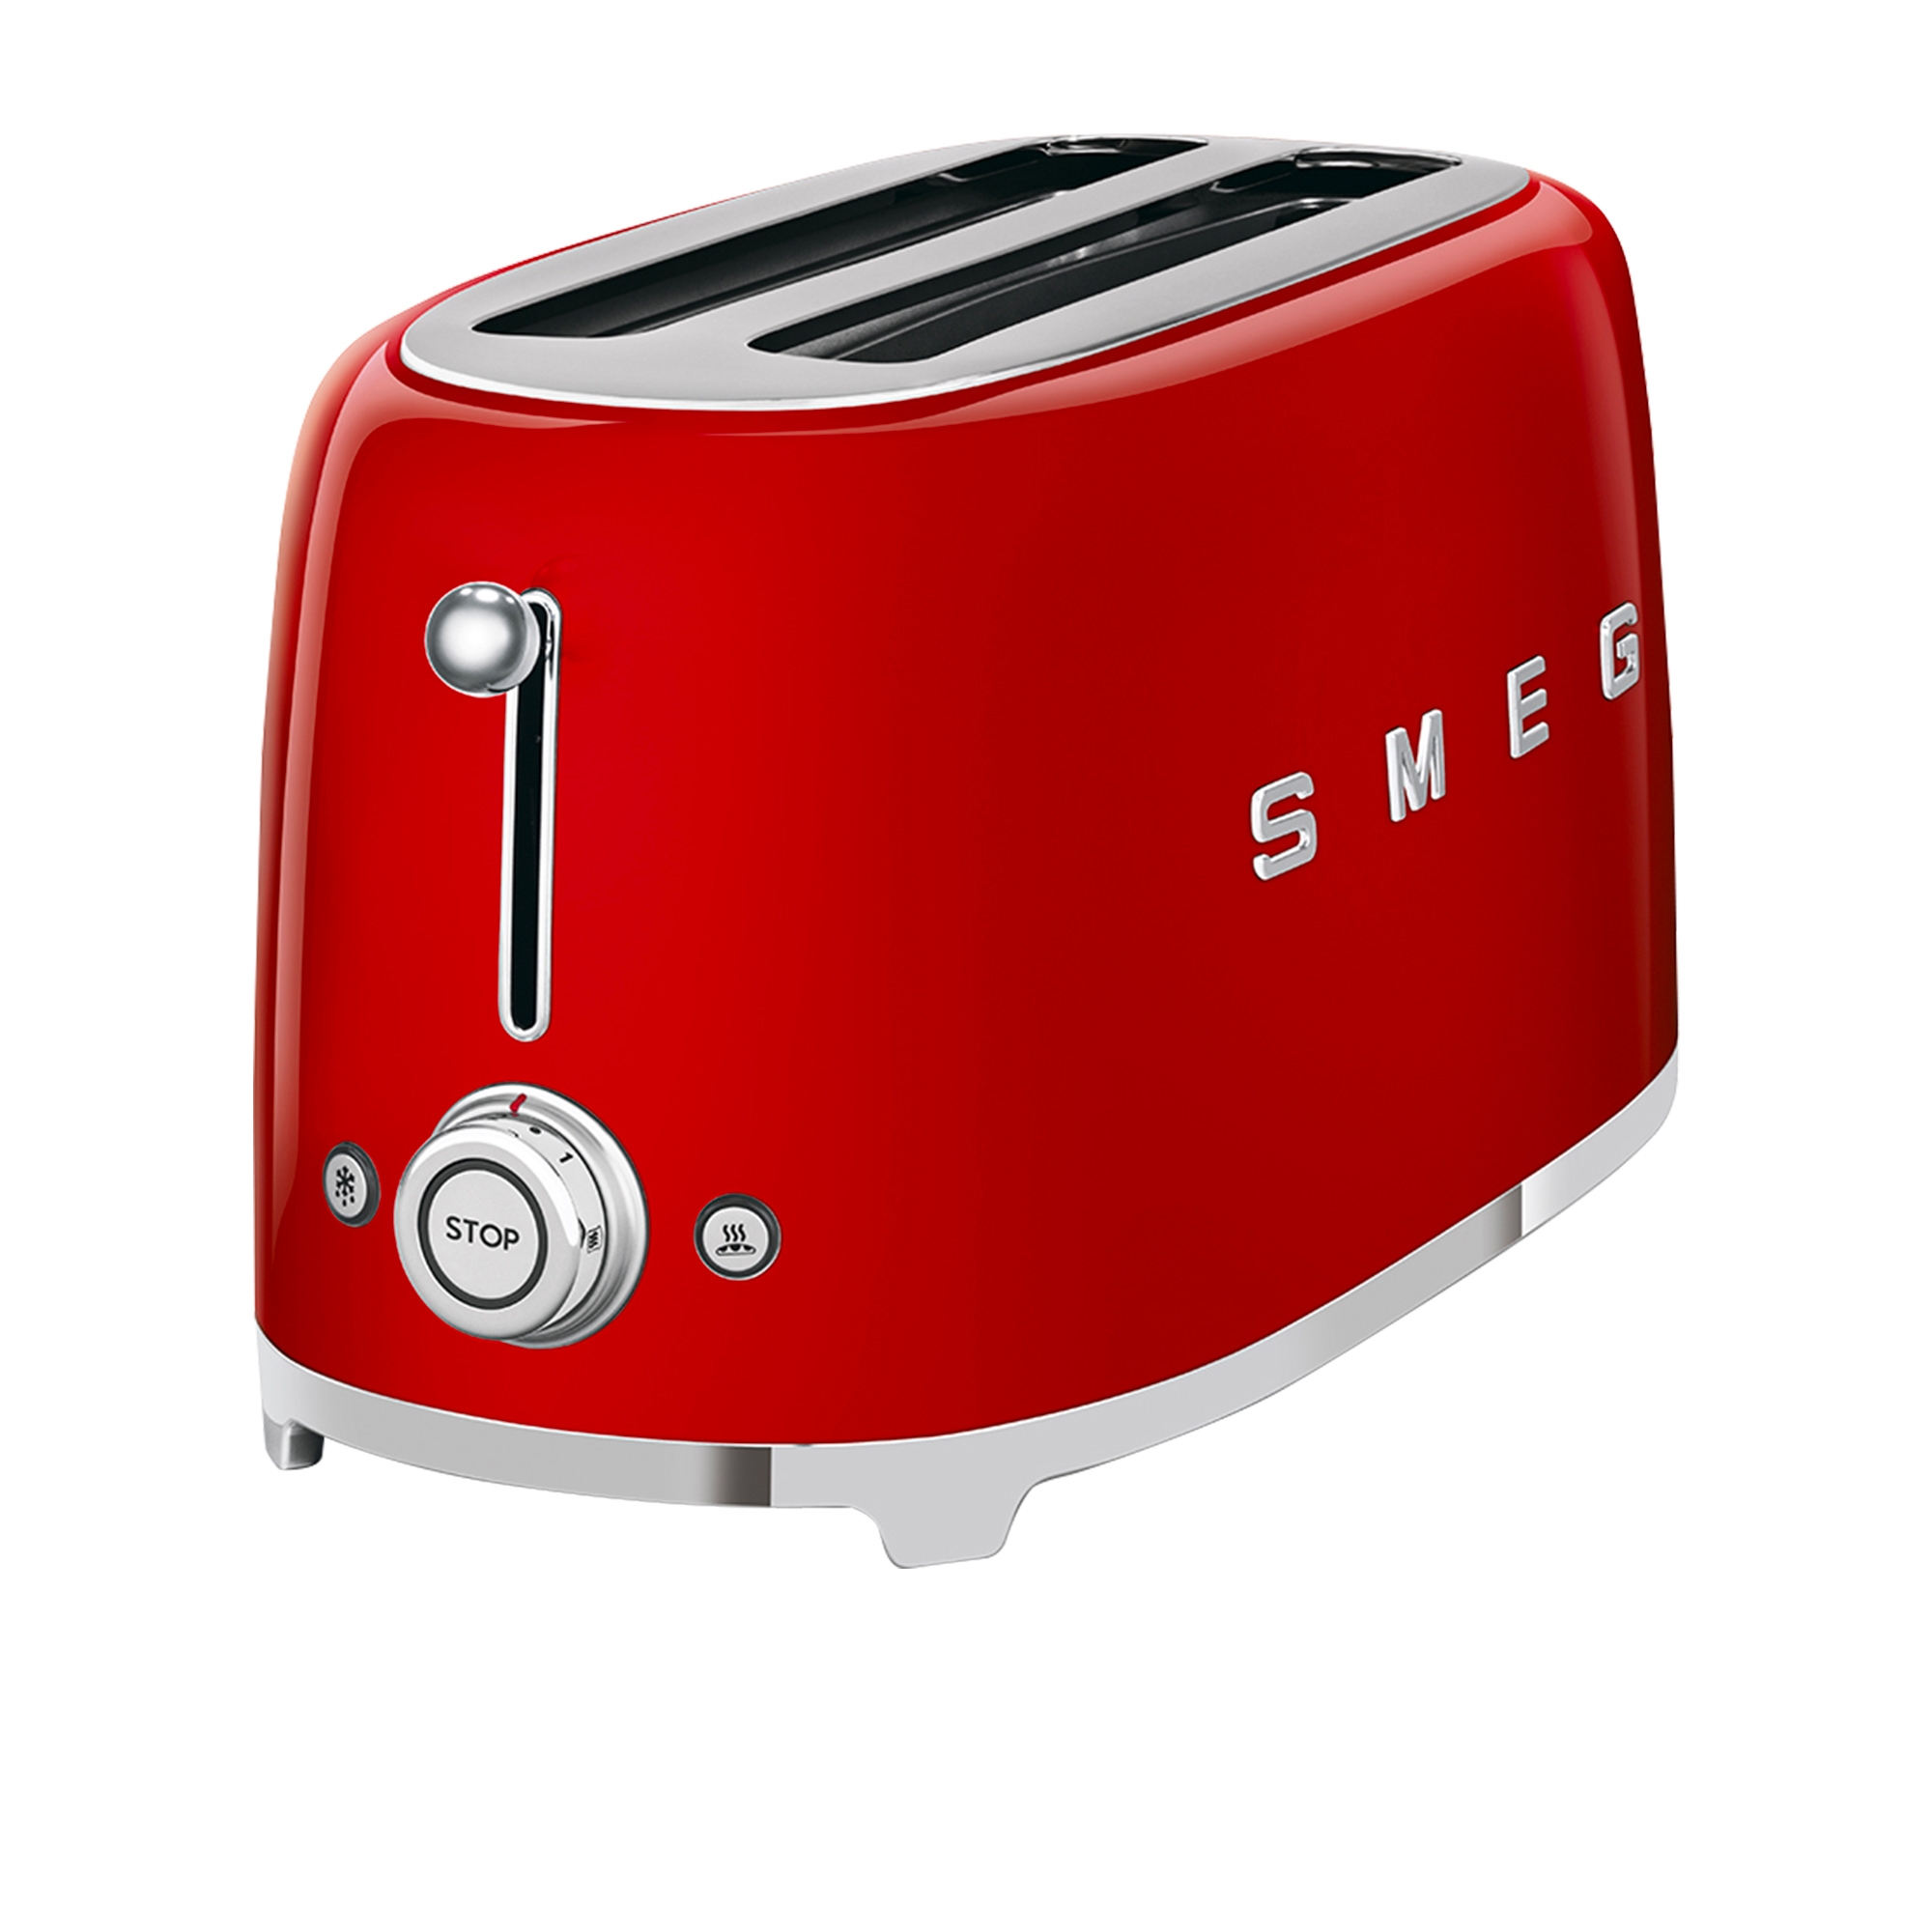 Smeg 50's Retro Style 4 Slice Toaster Red Image 1